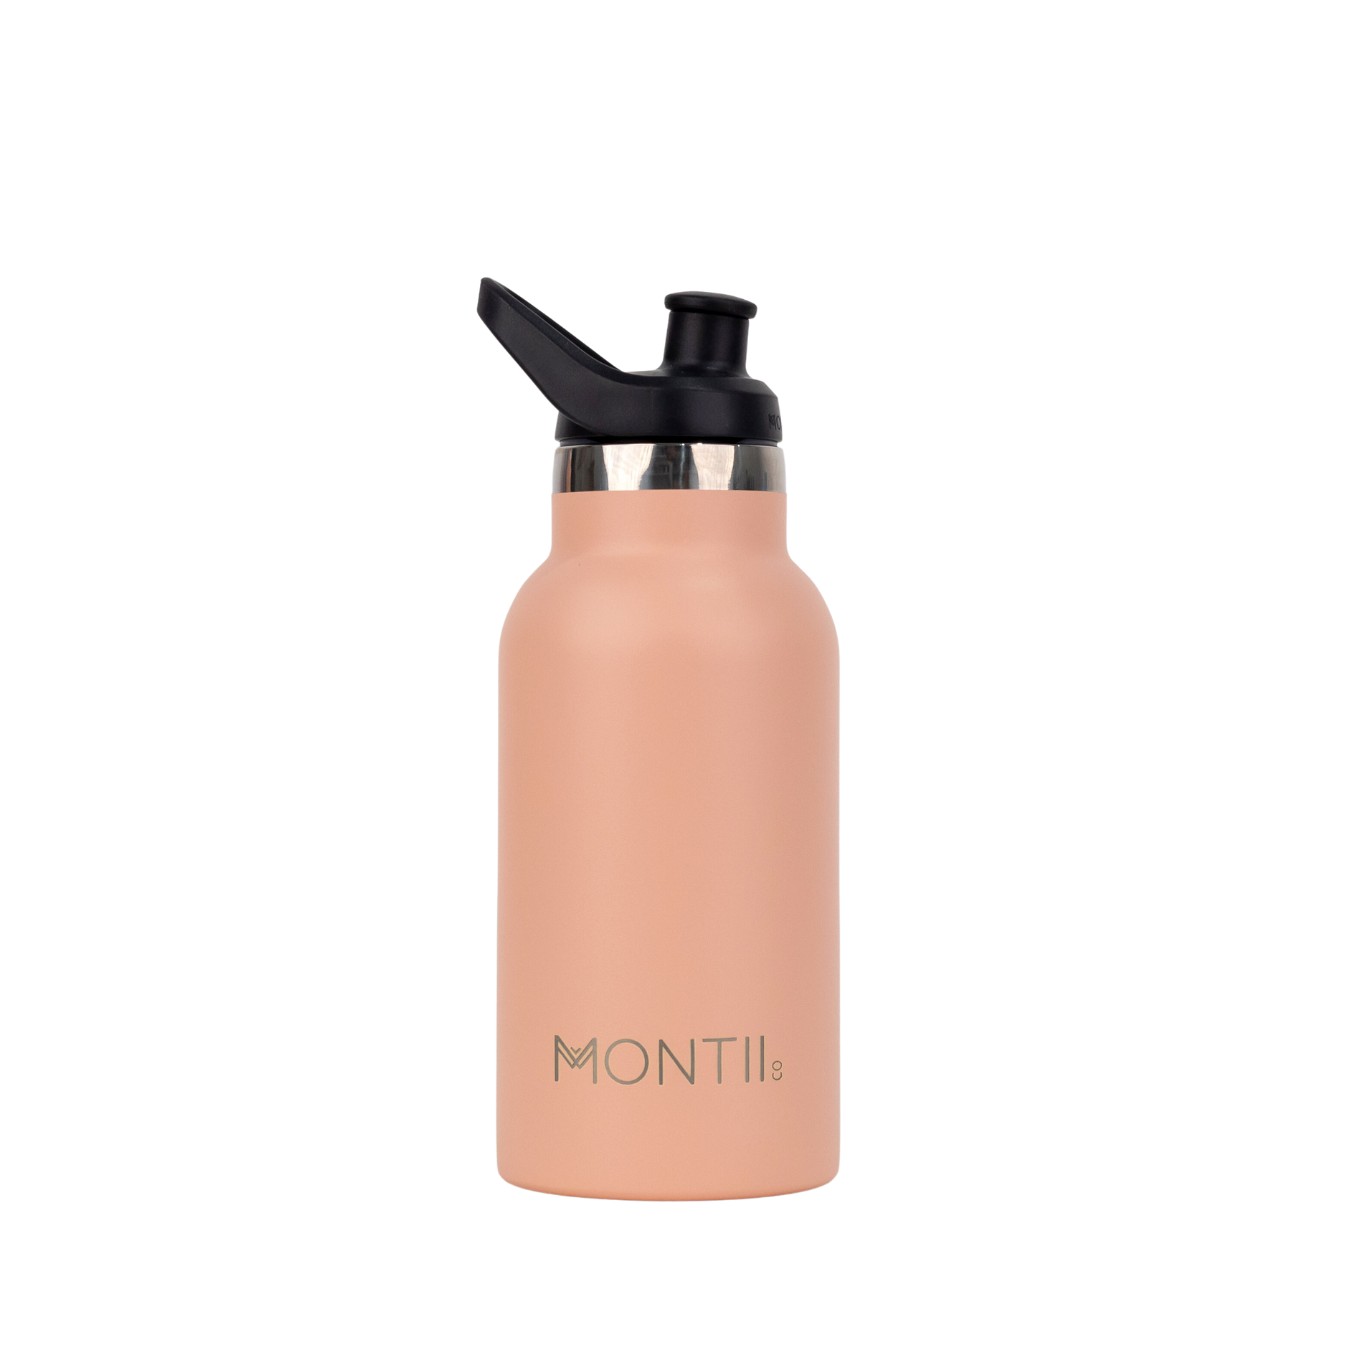 Montii ORIGINAL COLLECTION Drink Bottle - Mini Size